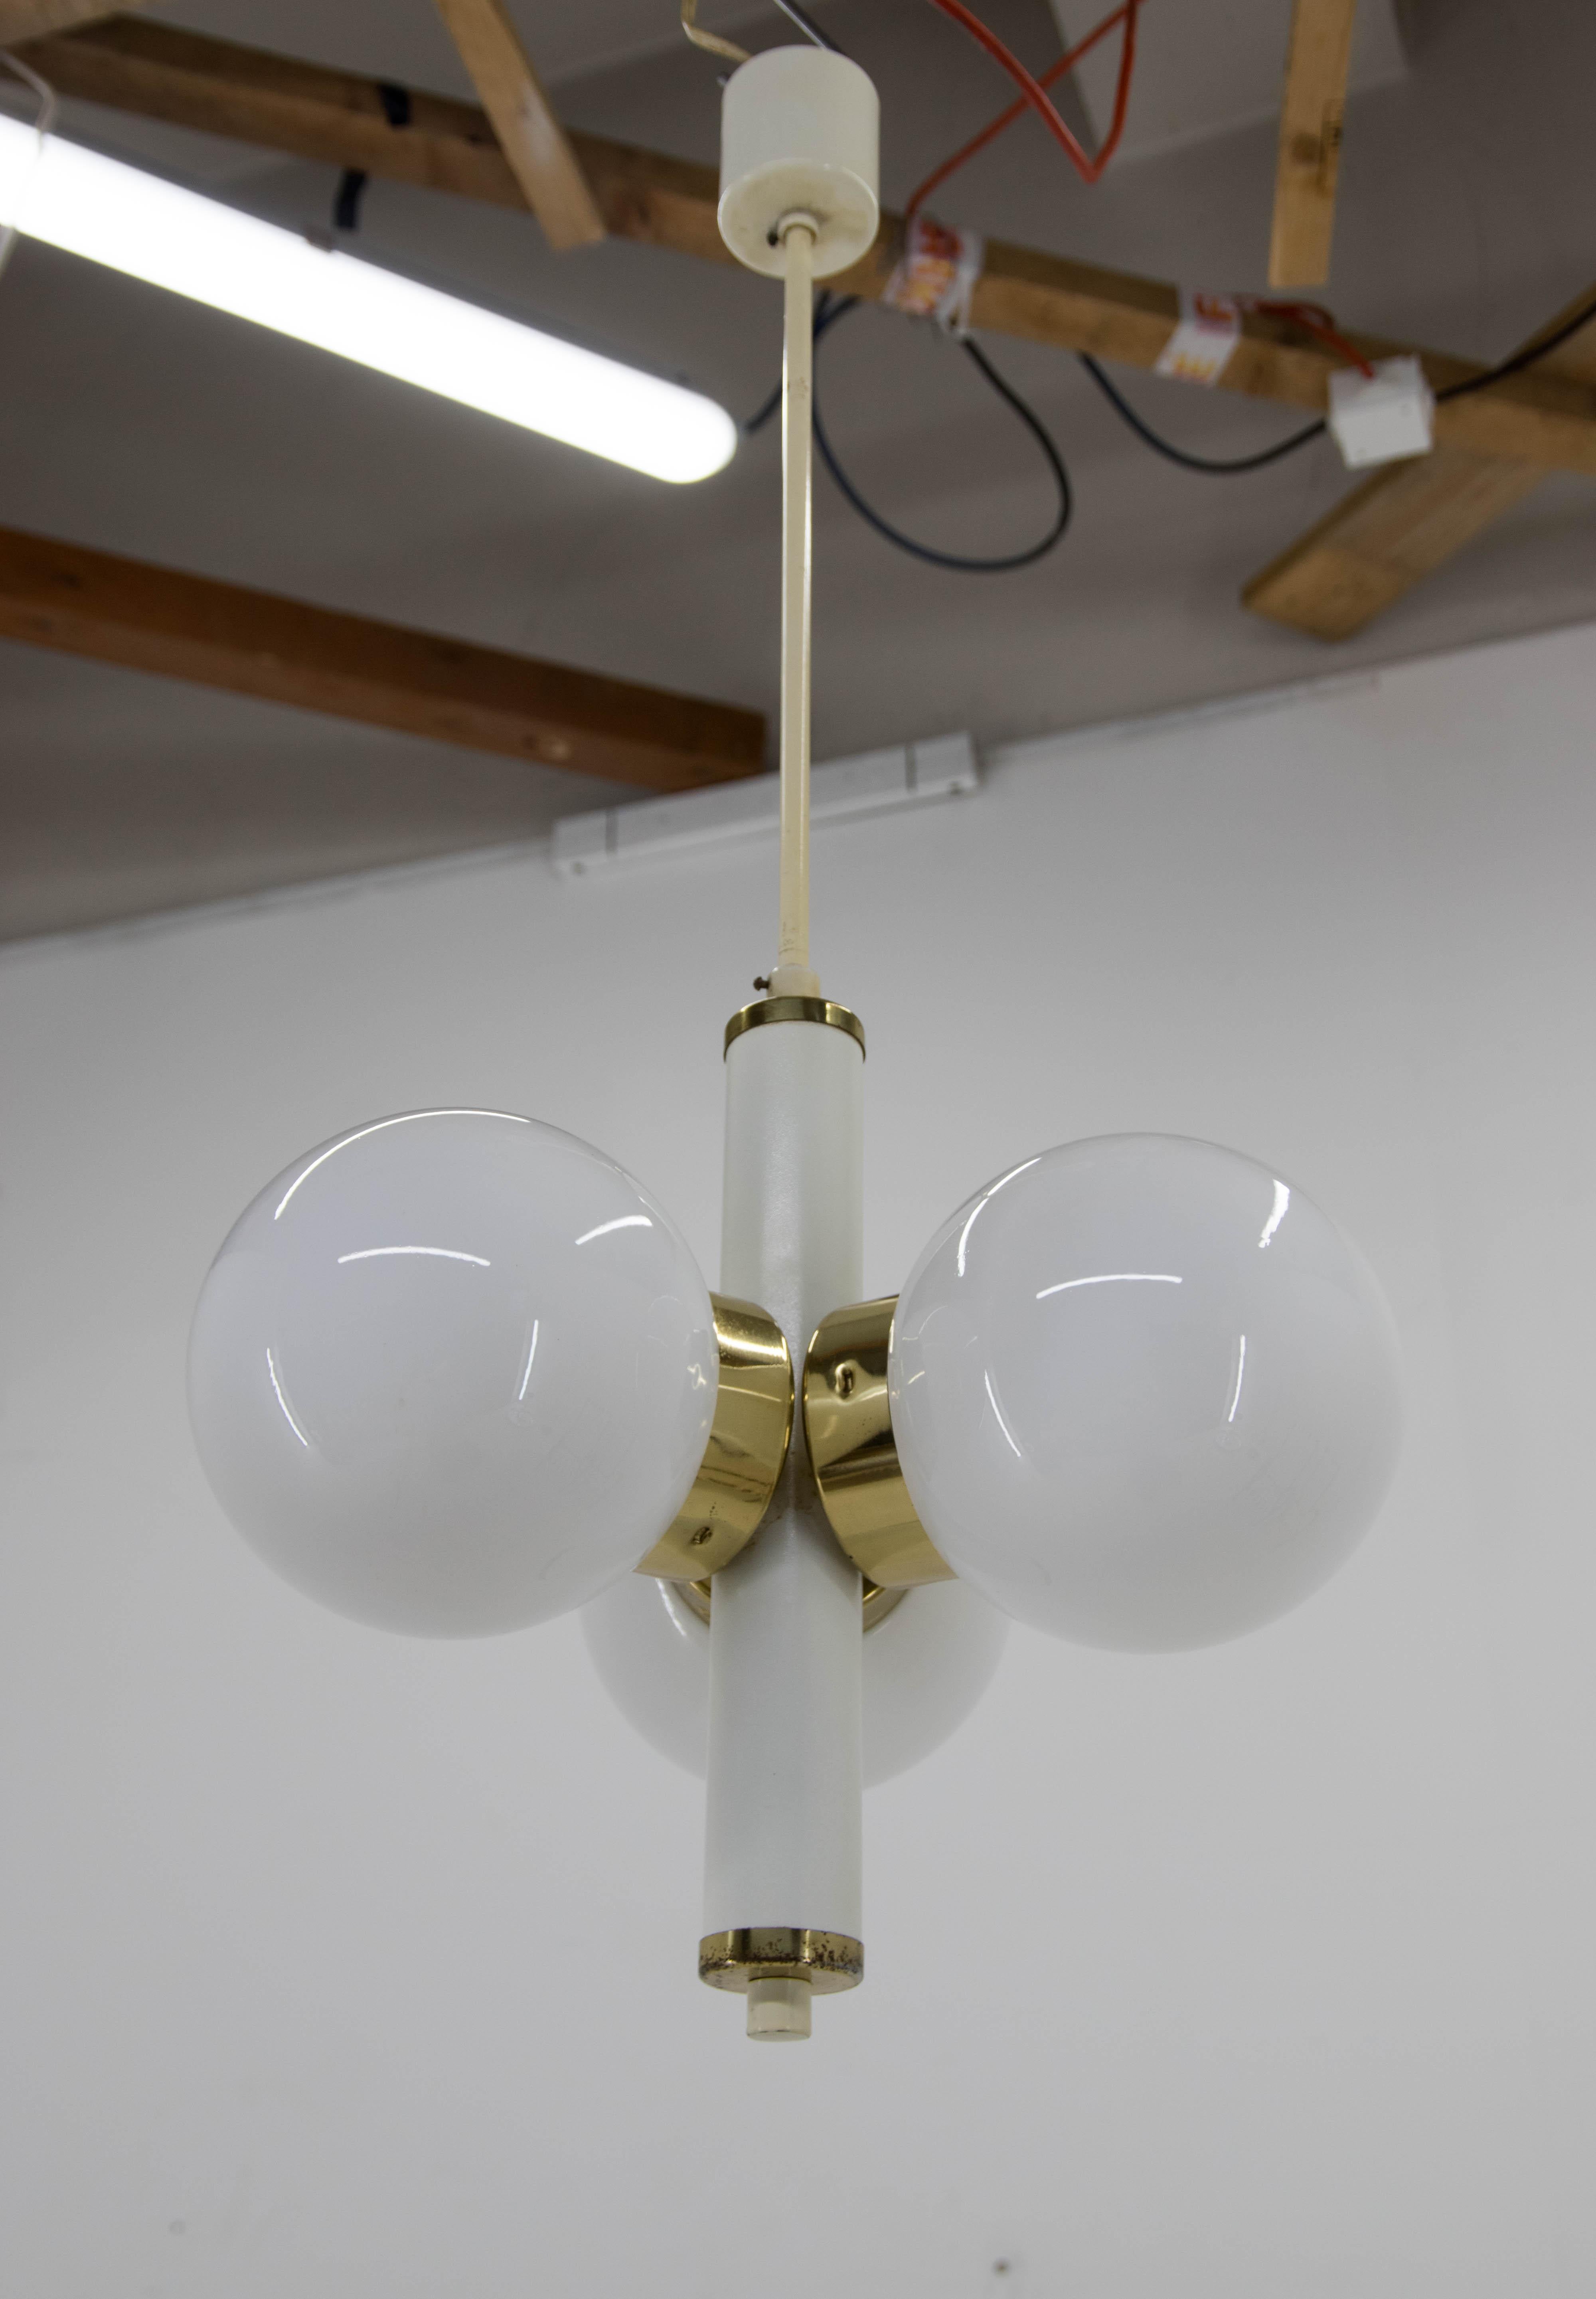 3-Flamming Space Age chandelier nade by Elektroinstala Jilove u Decina in 1960s.
Good original condition.
3x60W, E25-E27 bulbs
US wiring compatible